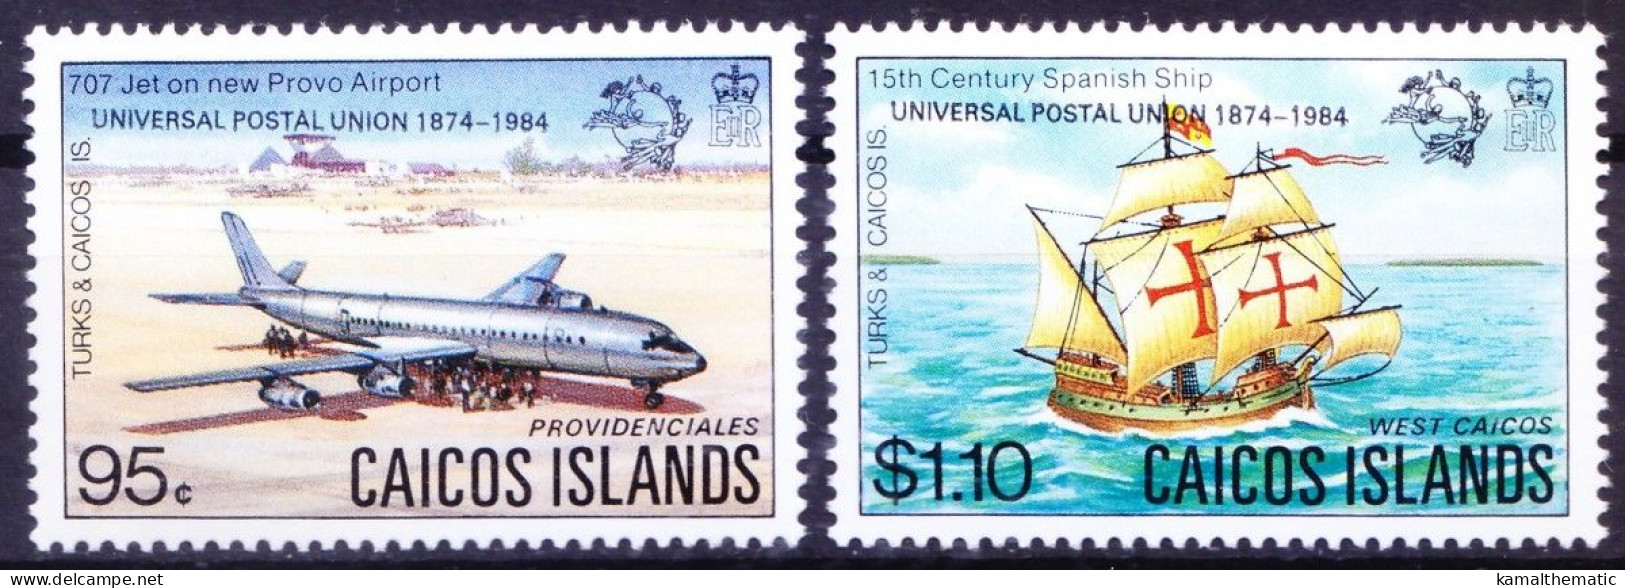 Caicos Islands 1984 MNH 2v, U.P.U. Hamburg, Overprint - UPU (Universal Postal Union)